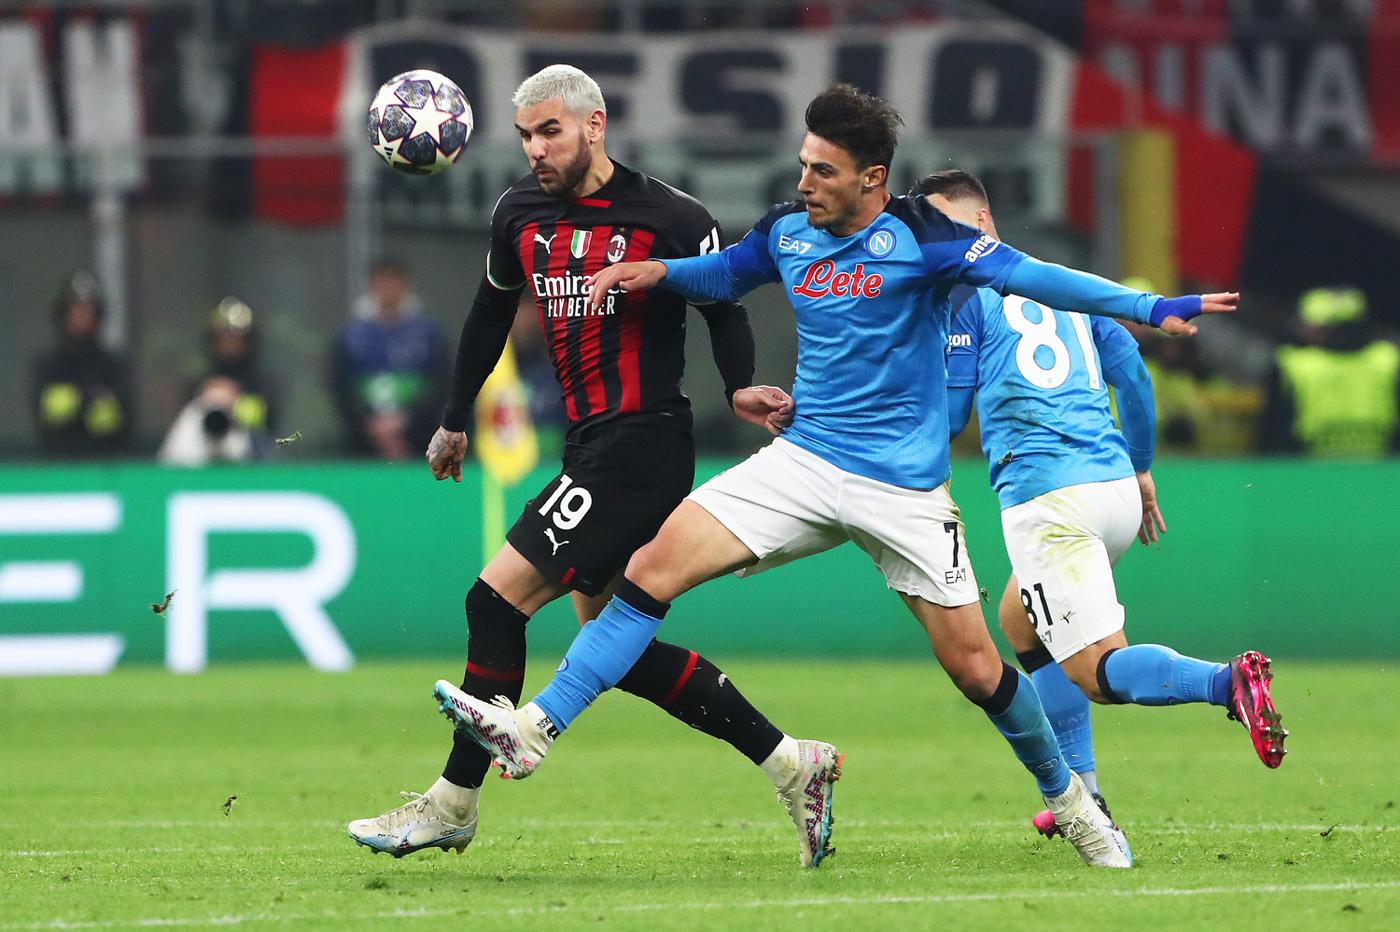 Milan - Napoli - 1:0. Champions League. Match review, statistics